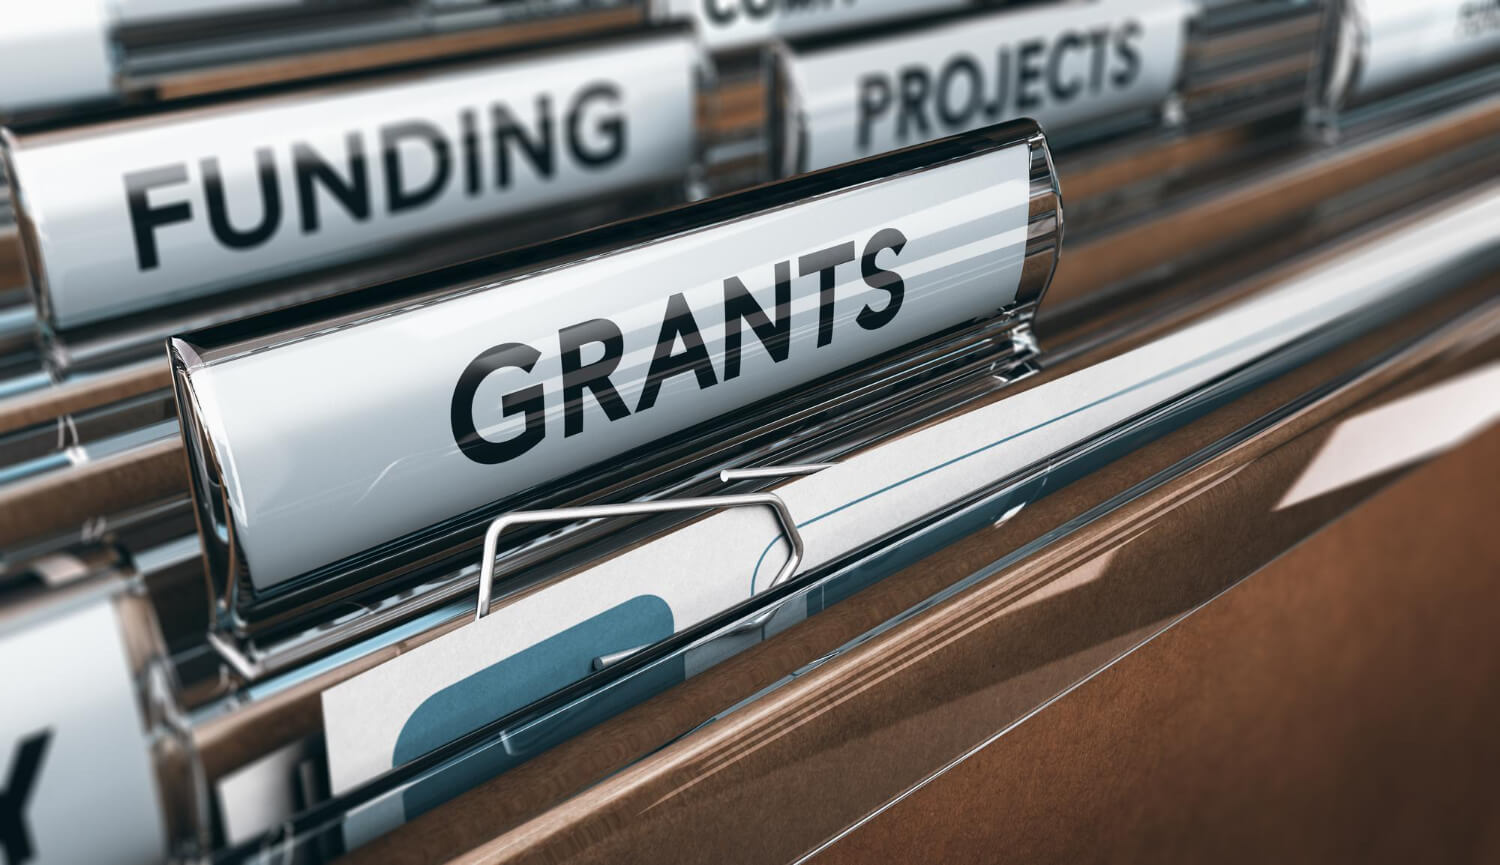 California offers grants